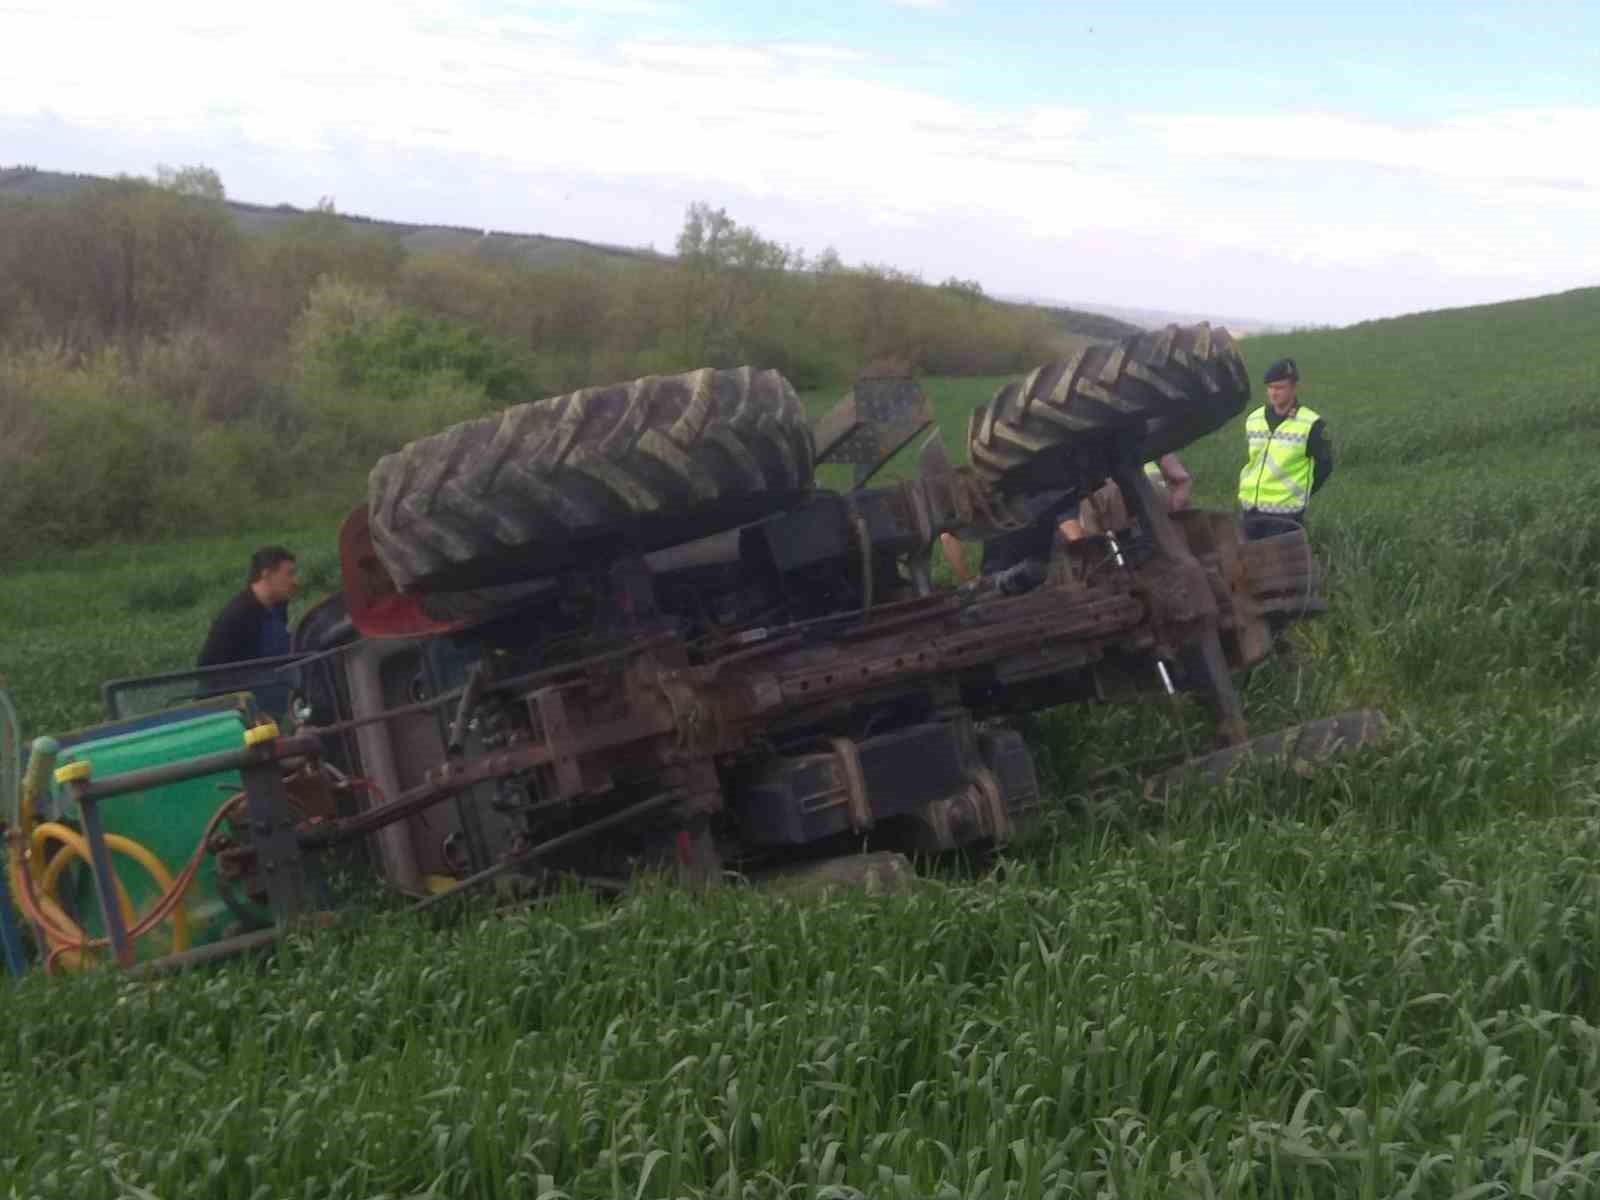 tarlada ilaclama yaparken devrilen traktorun altinda kalan ciftci hayatini kaybetti 1 Y1VLtm1h